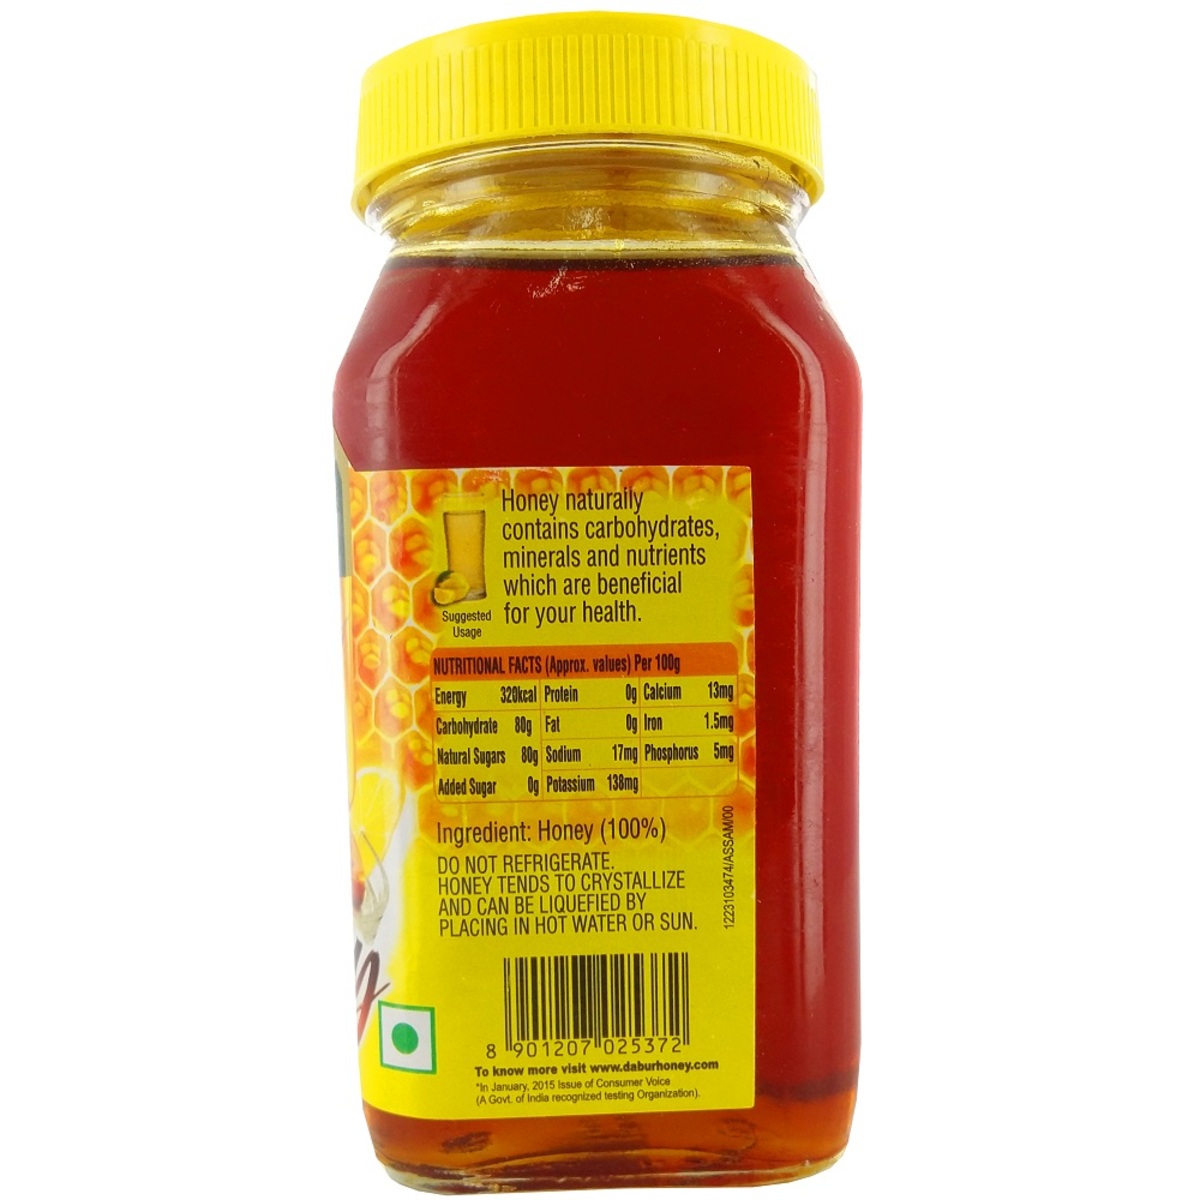 Dabur Honey Pure 500g